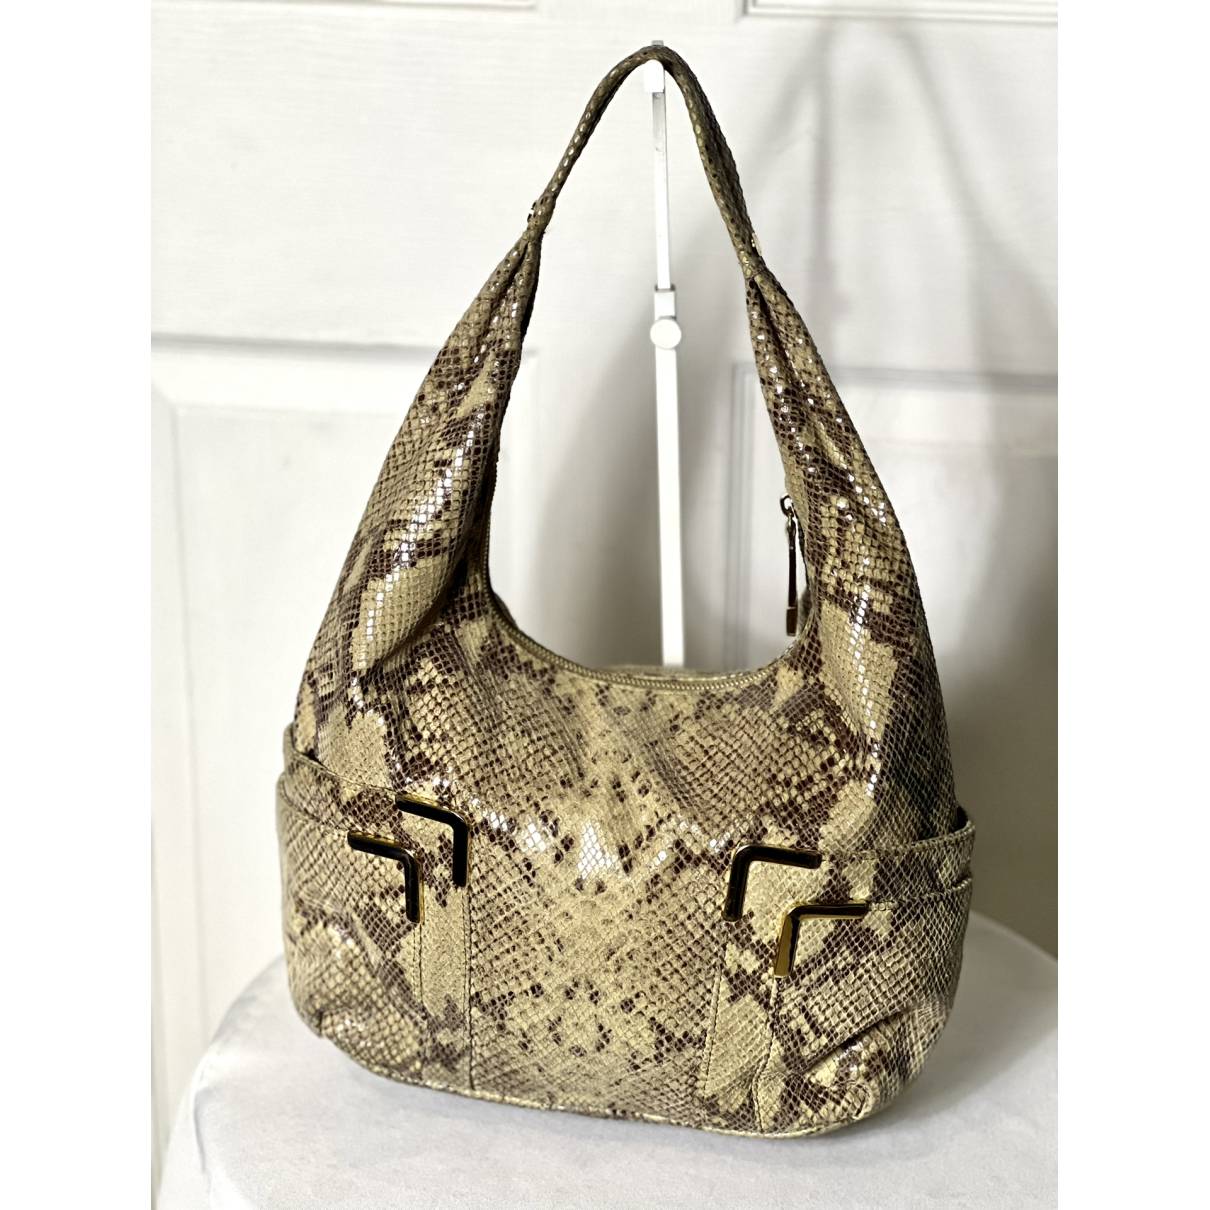 Michael Kors - Authenticated Handbag - Python Beige Snakeskin for Women, Very Good Condition